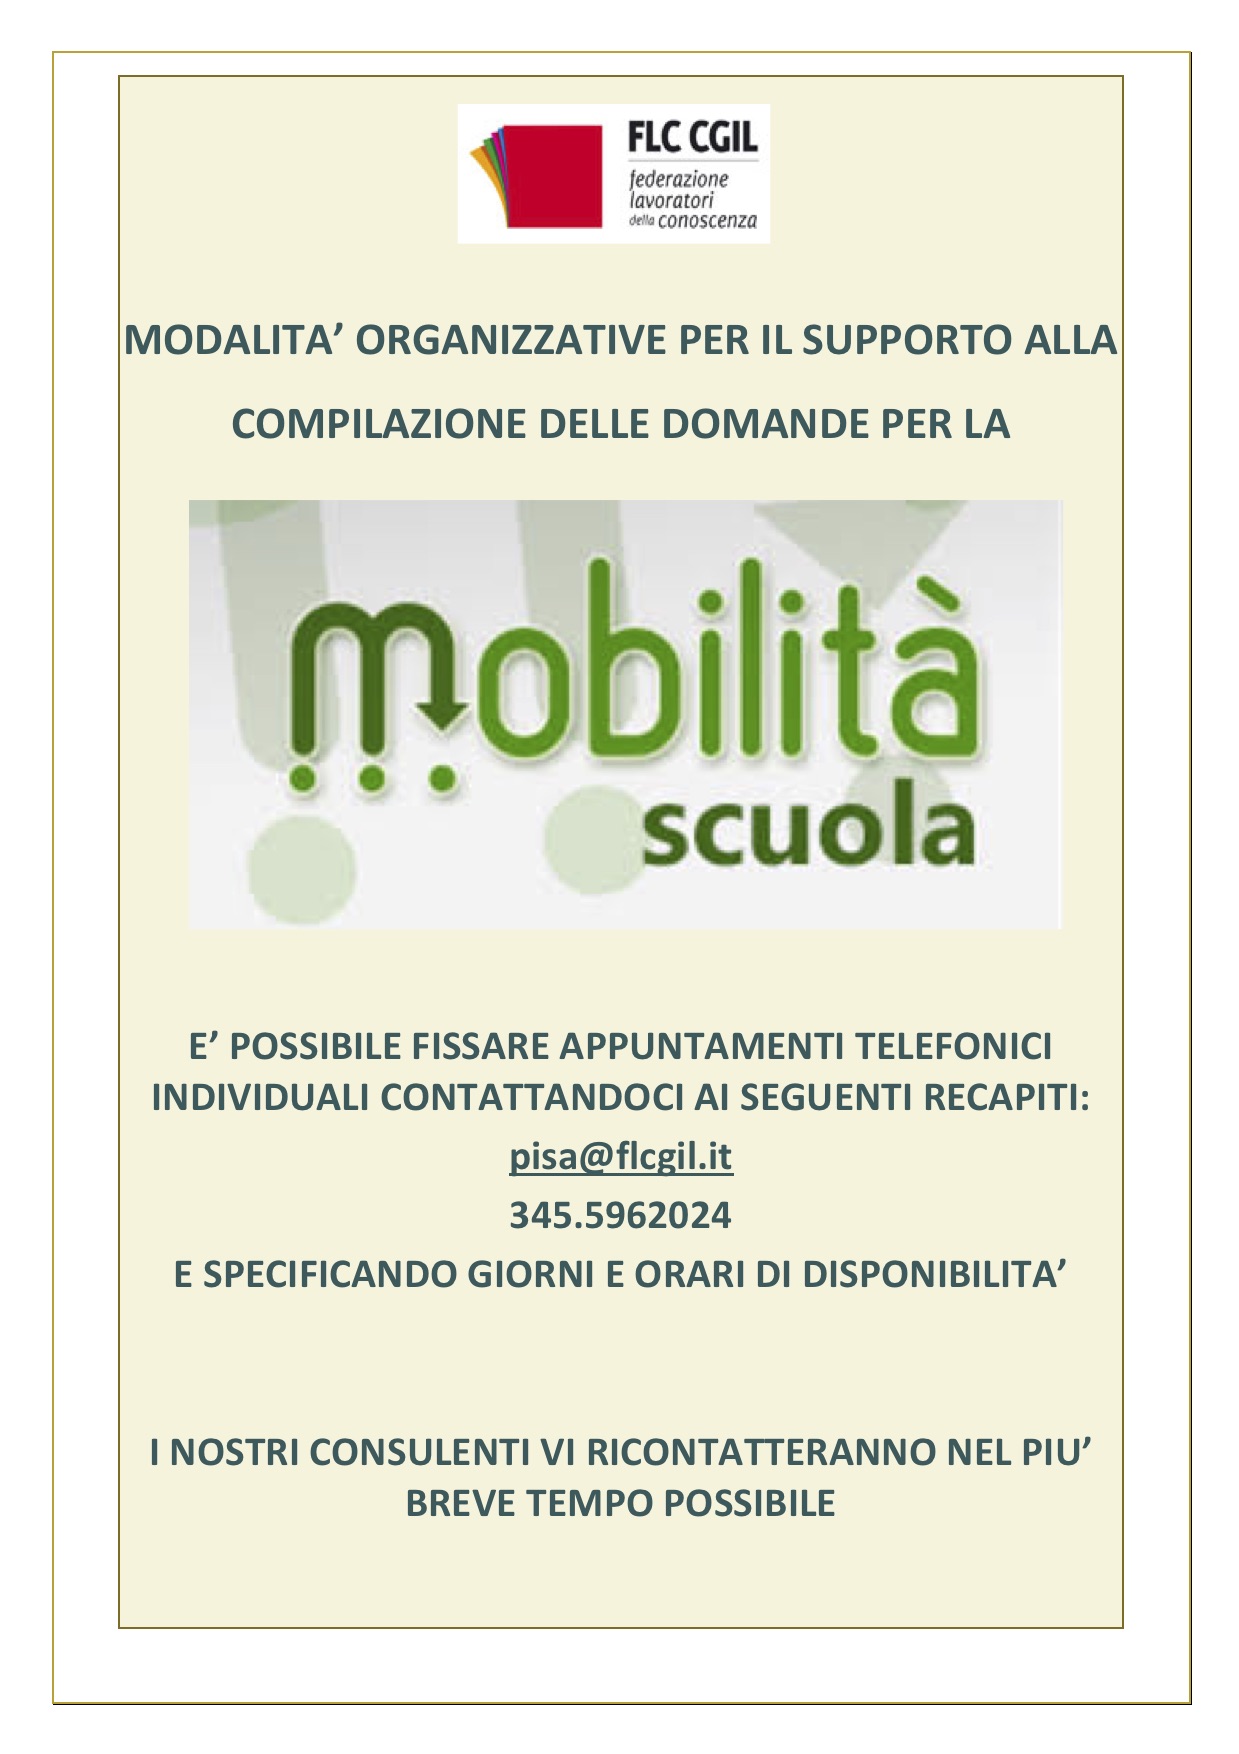 Mobilità scuola: la FLC di Pisa c'è!